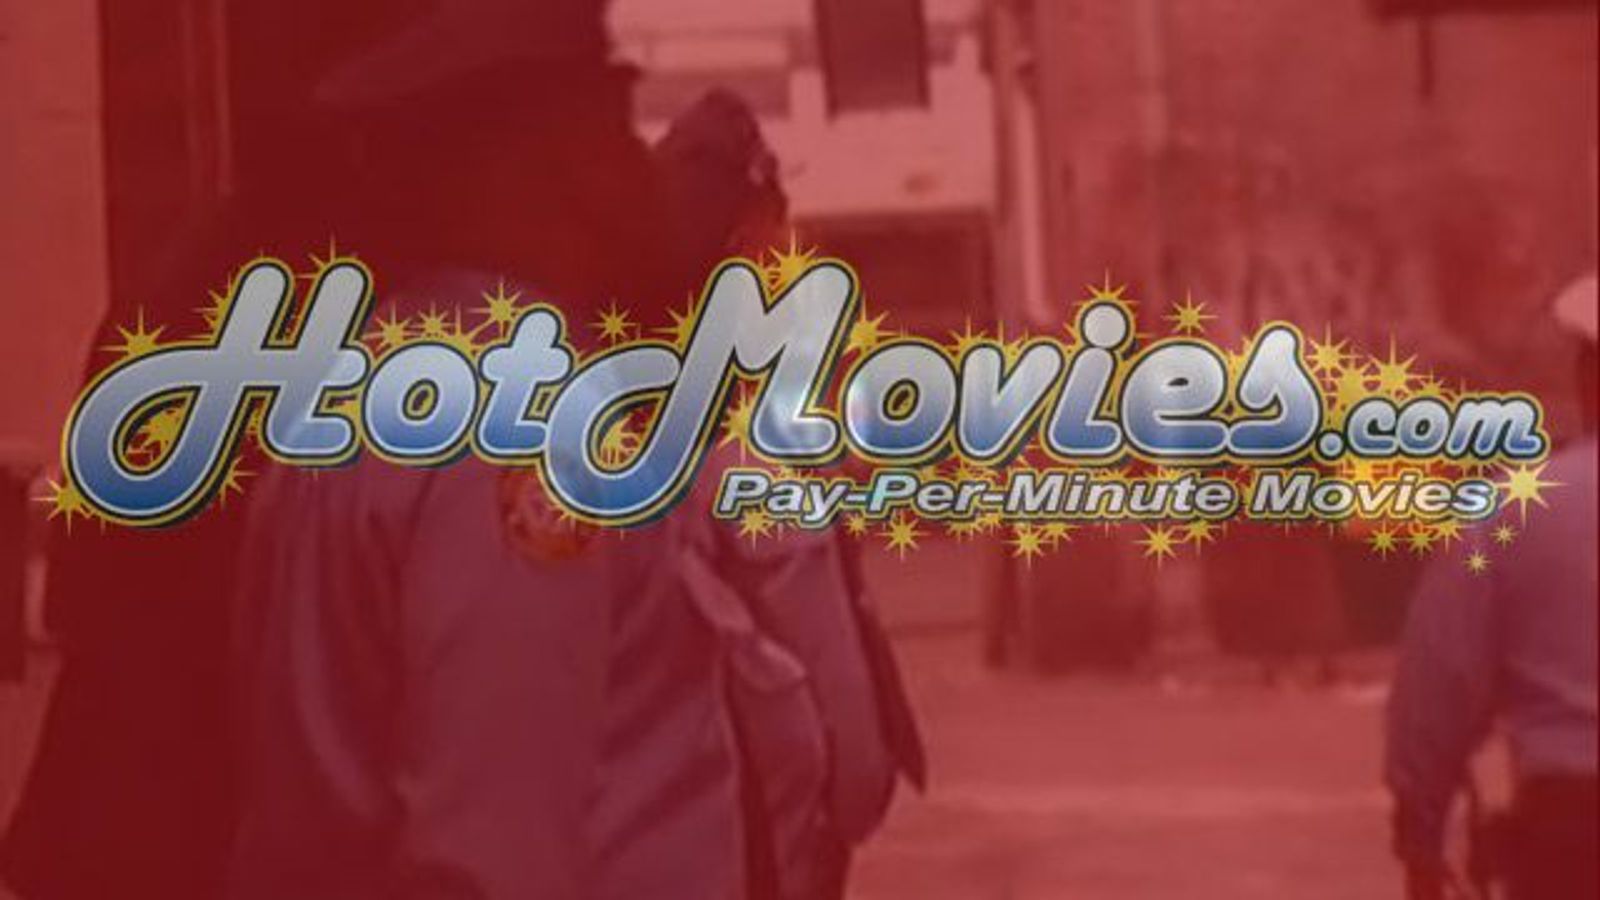 HotMovies.com SCOREs Exclusive VOD Deal for Mia Khalifa Movie